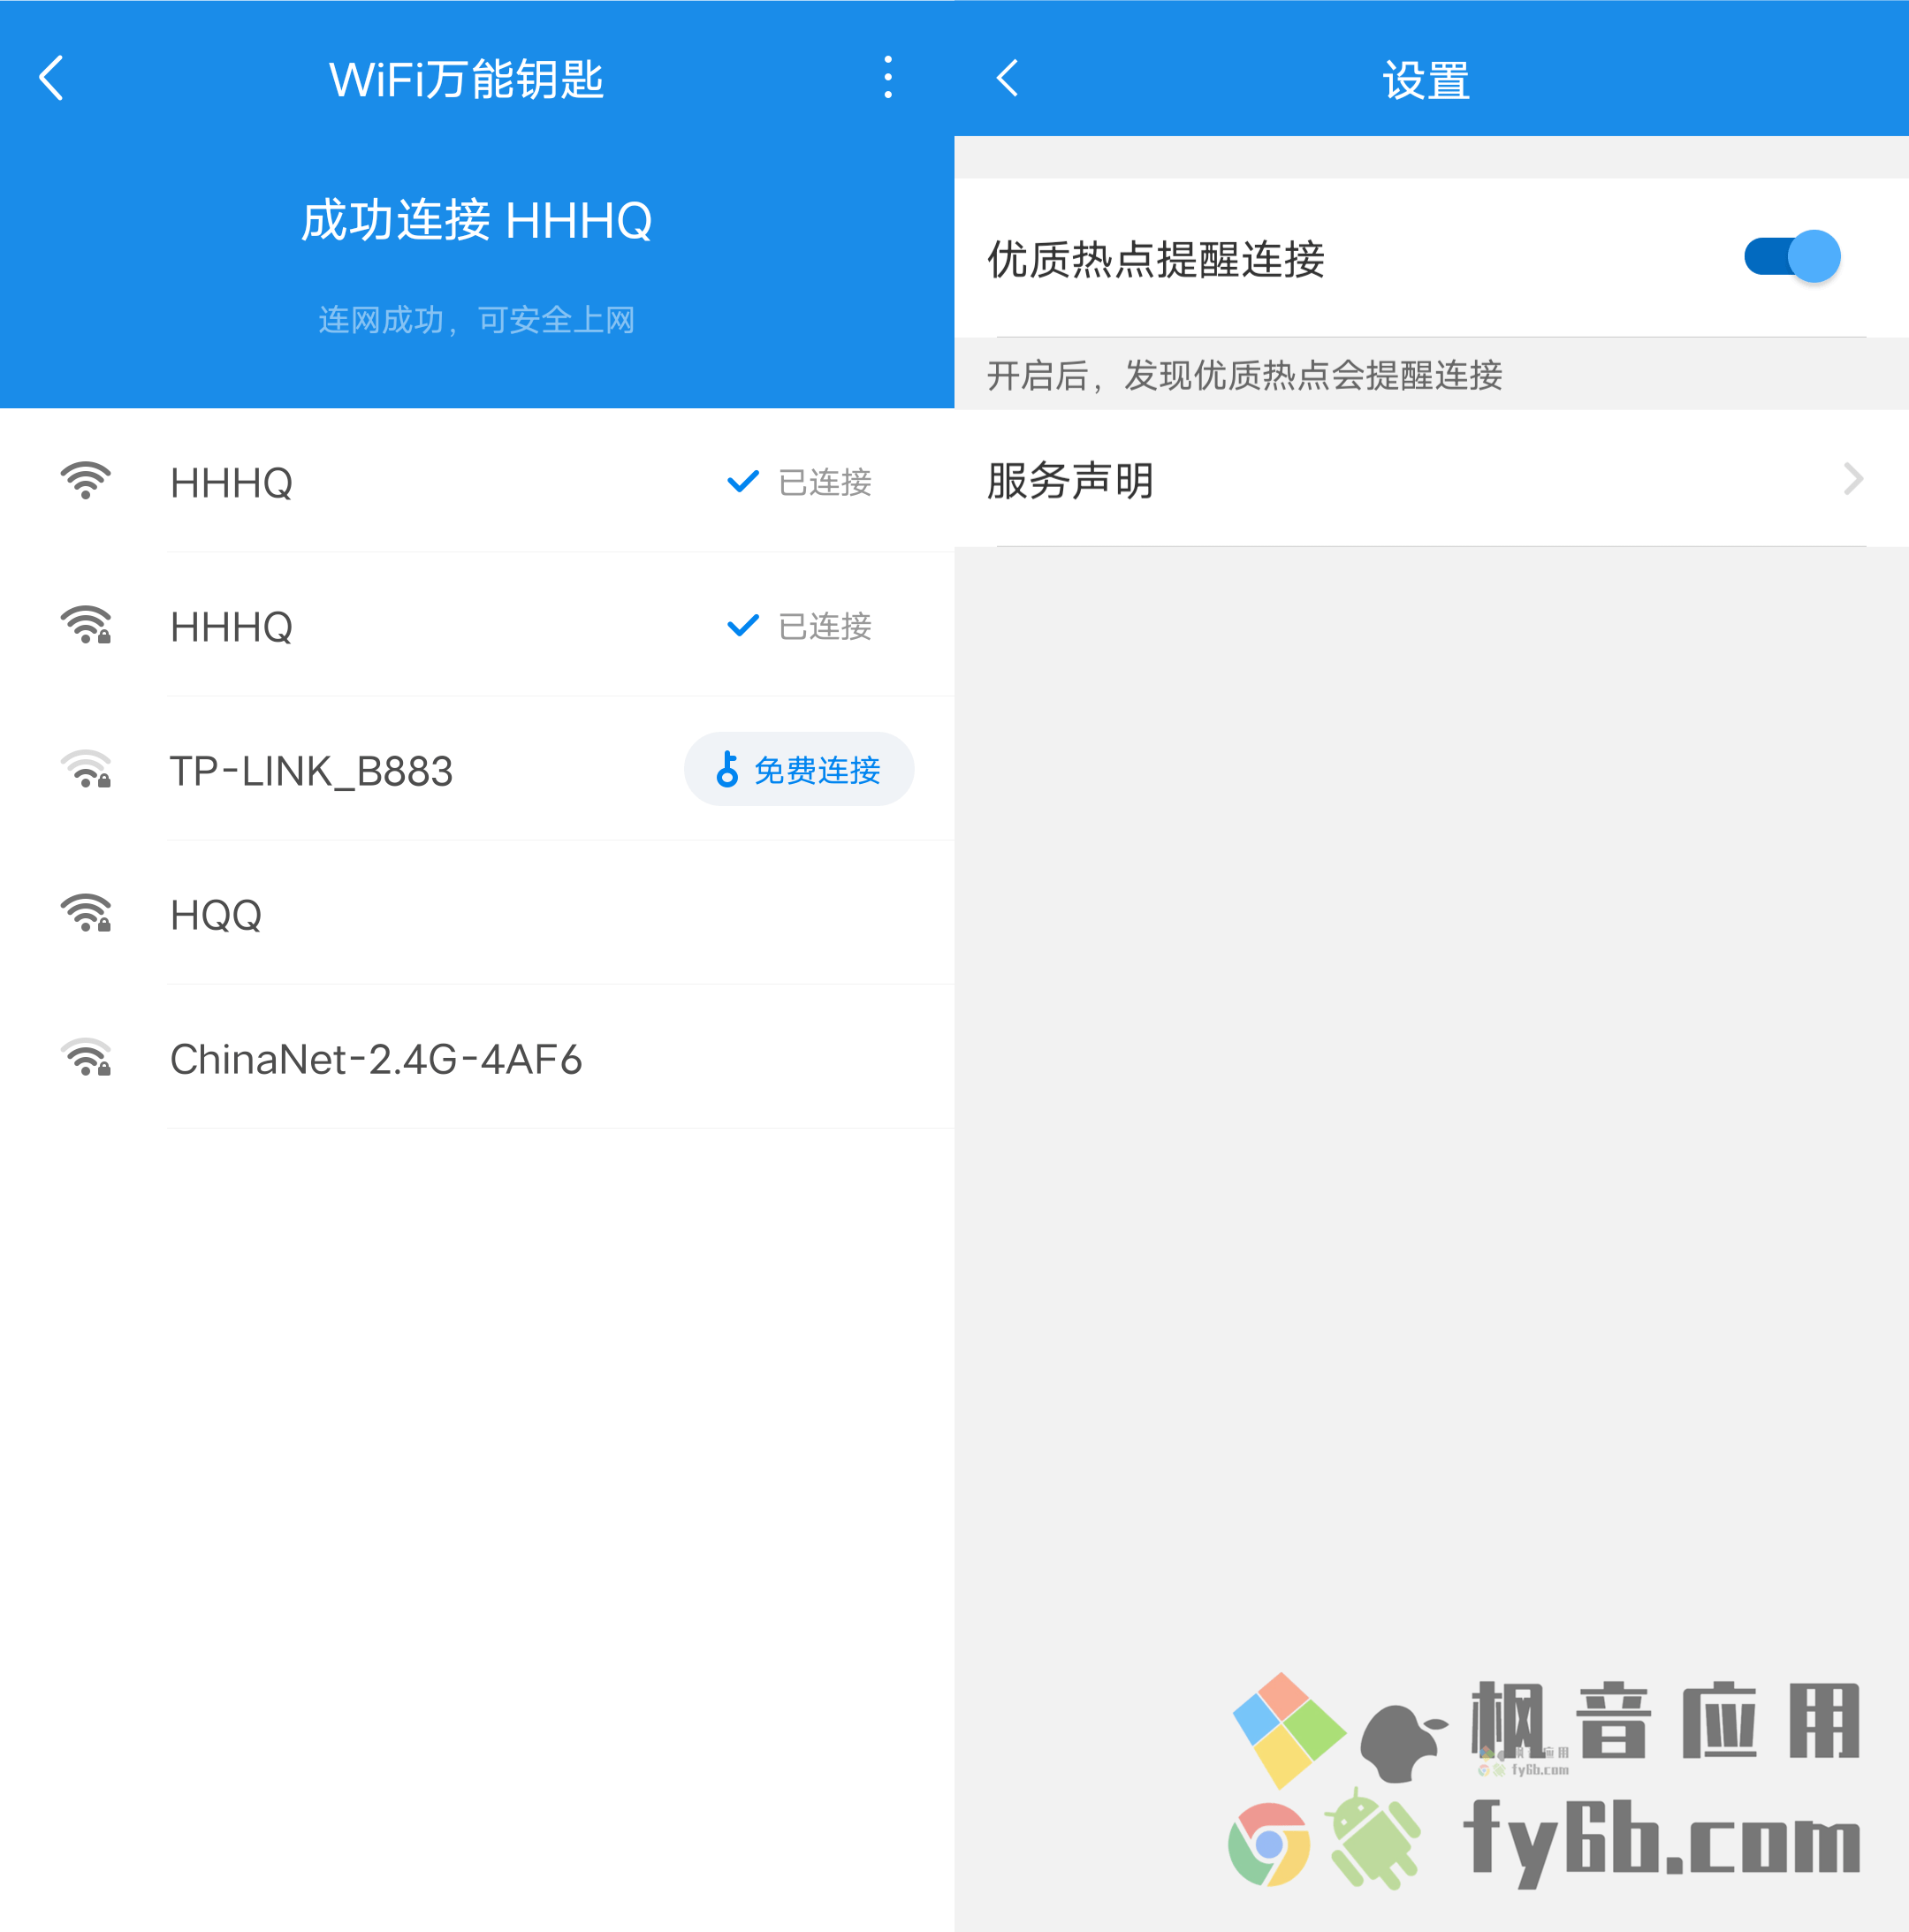 Android WiFi万能钥匙_v2.4.10 精简版